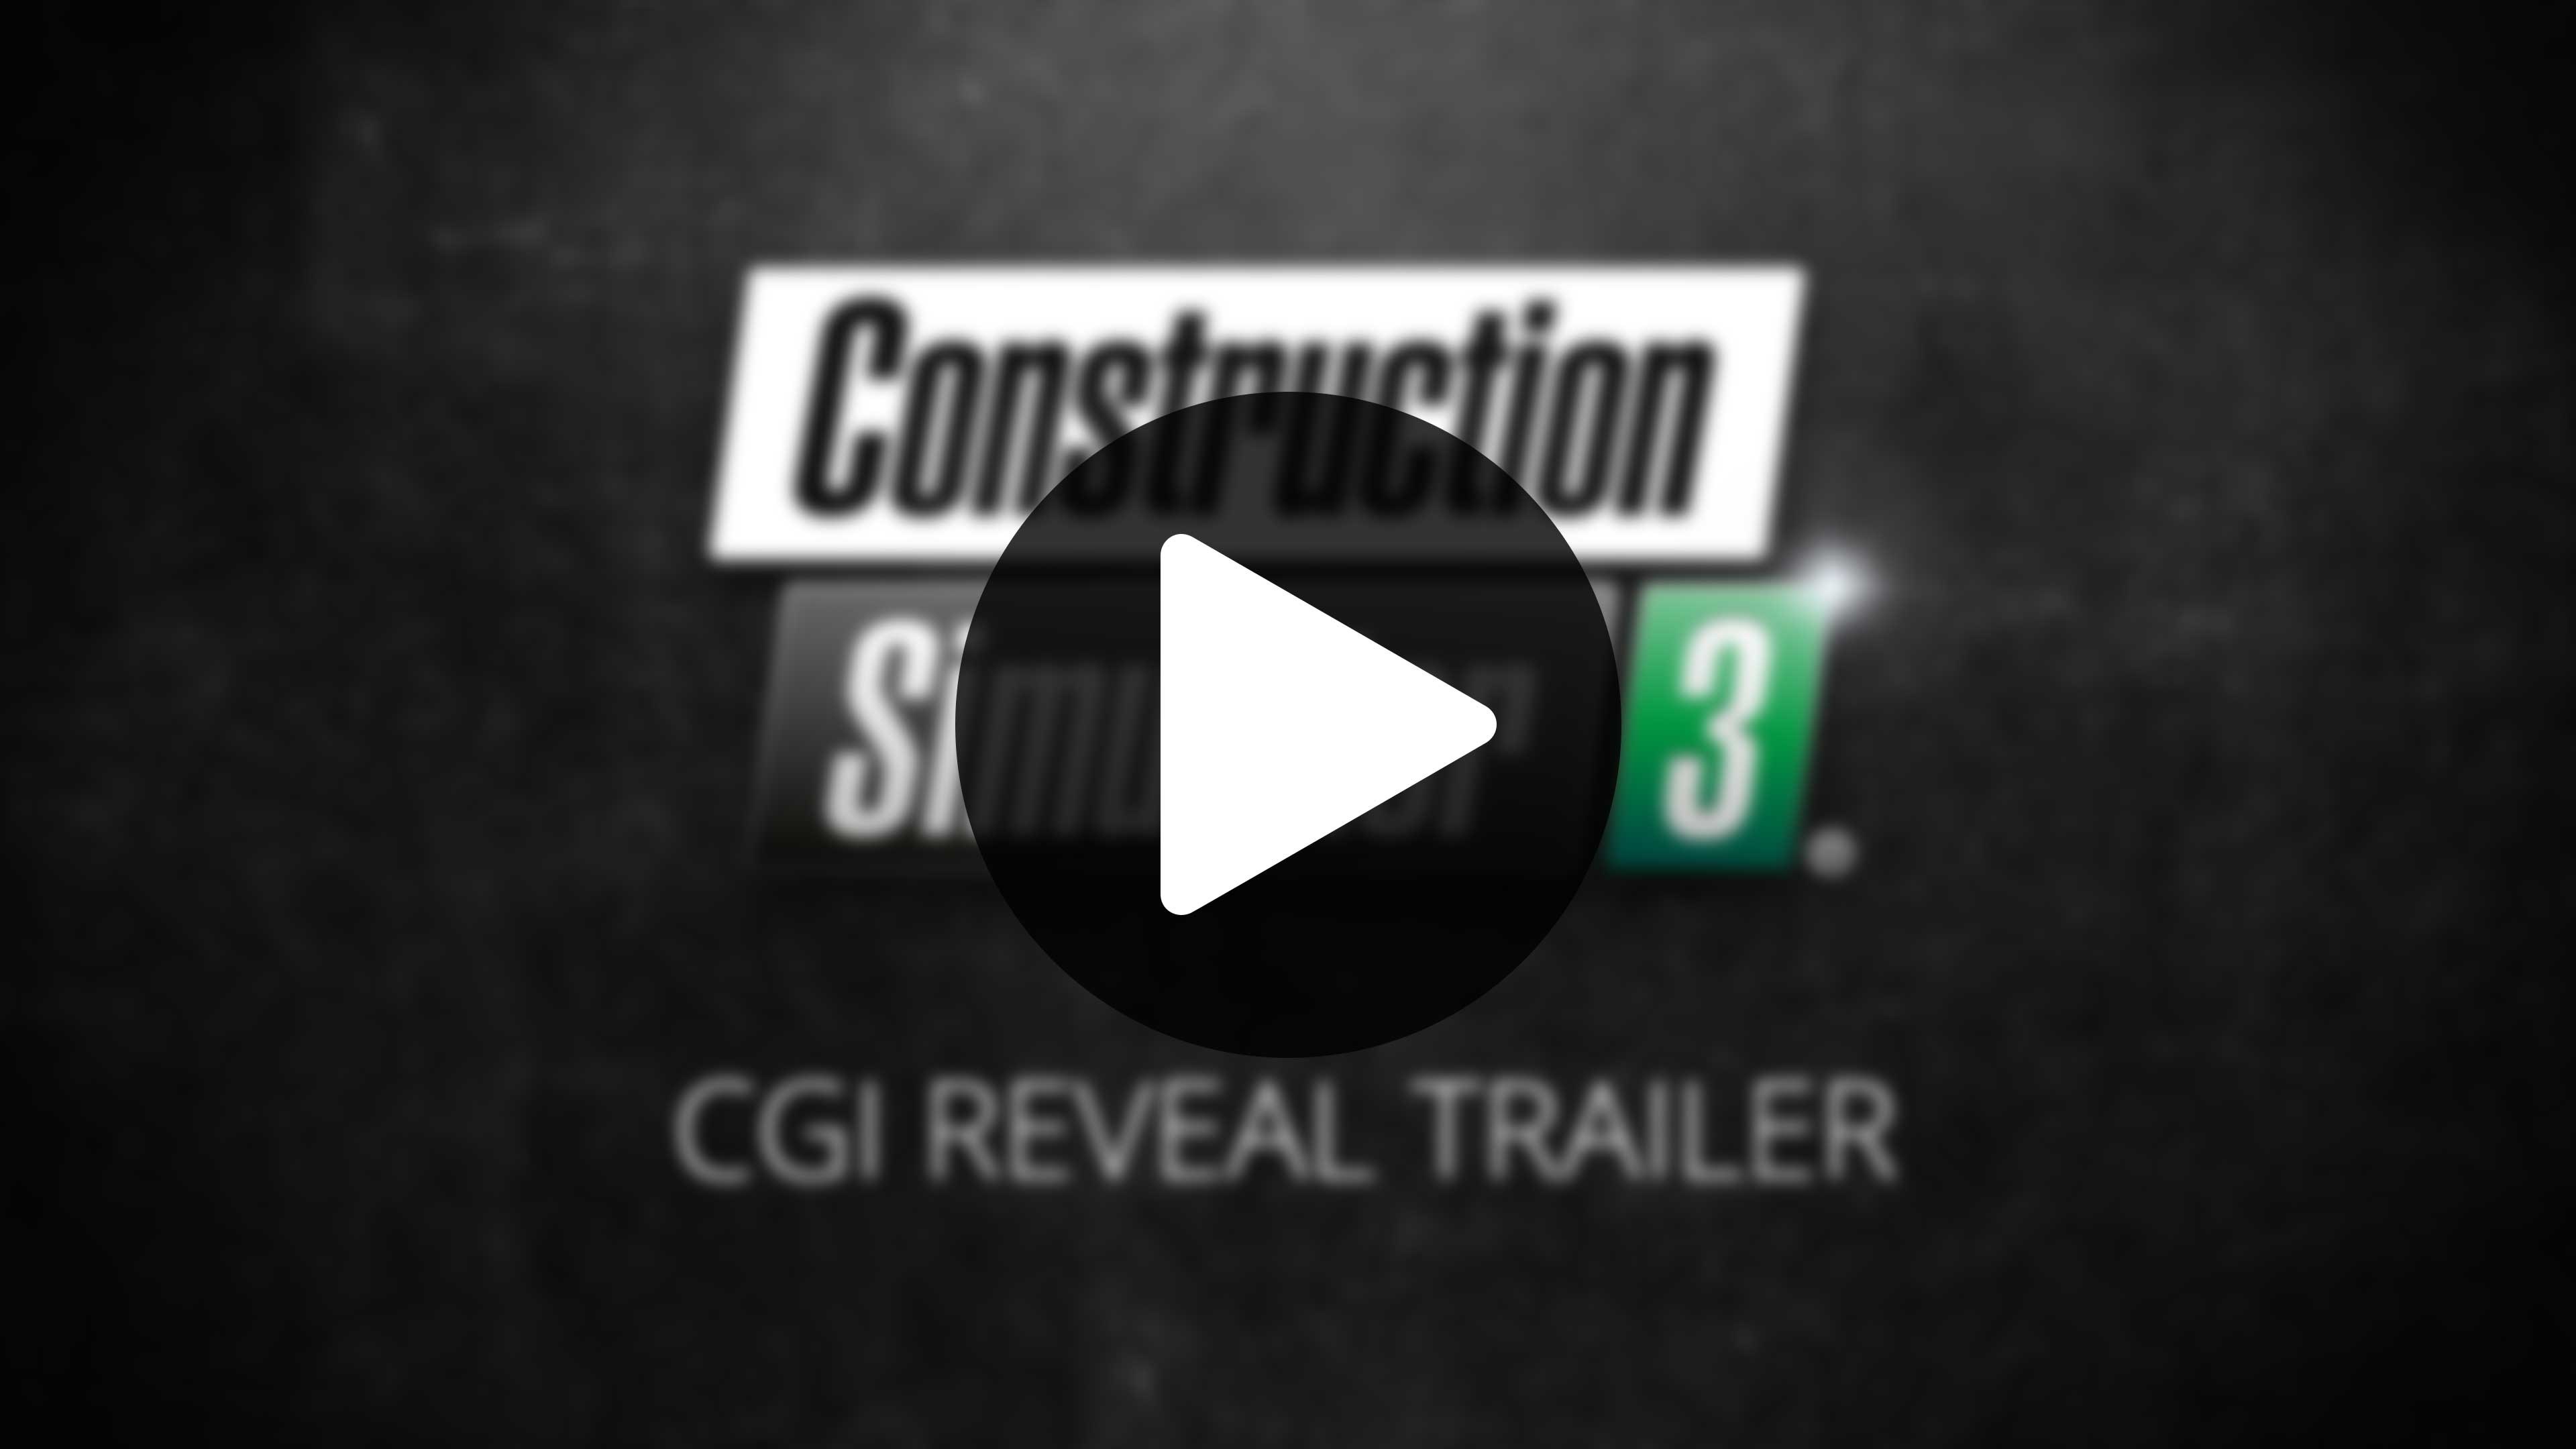 CGI Reveal Trailer